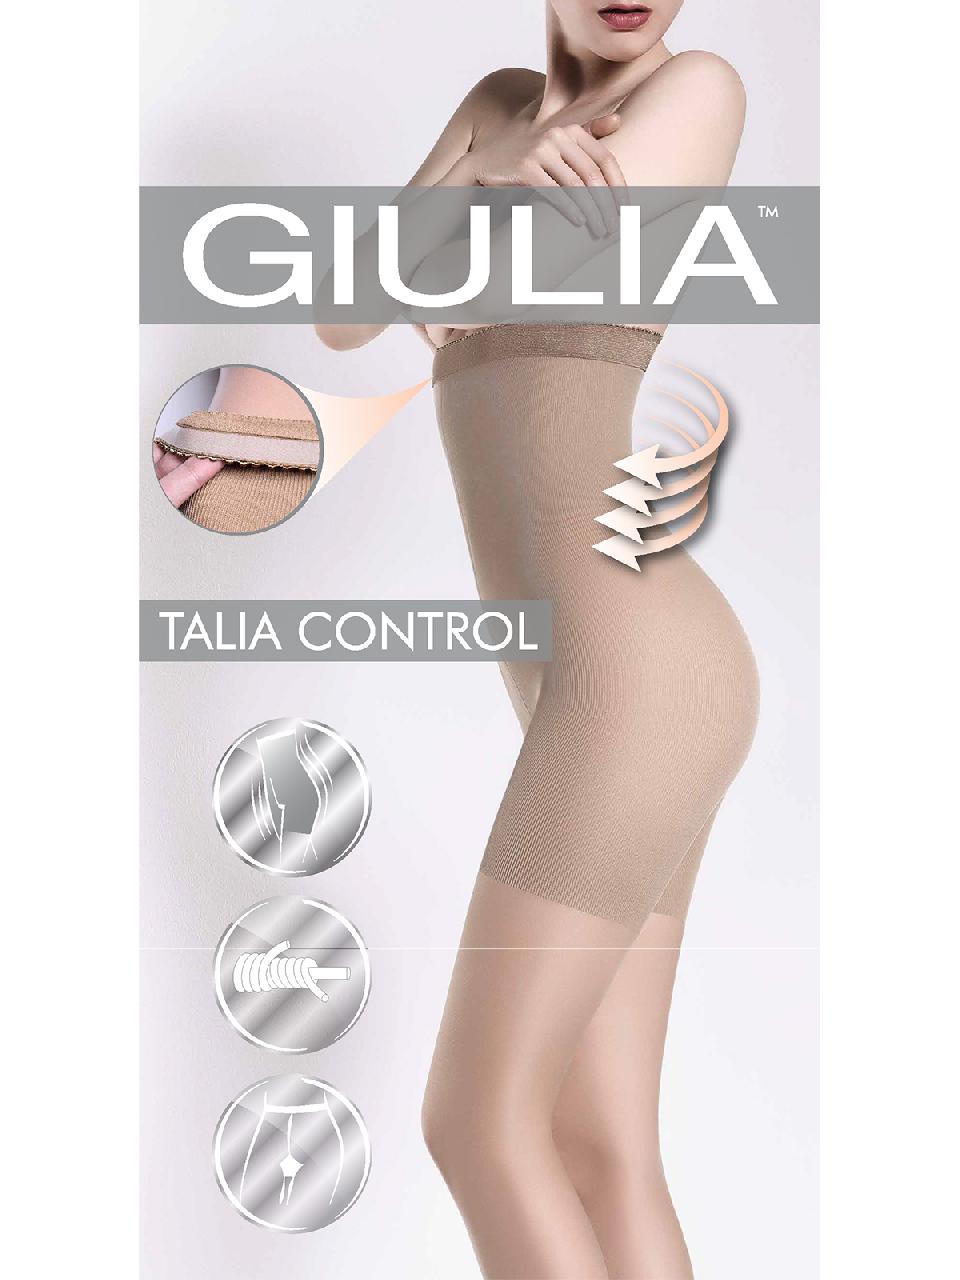 Giulia Talia control 40 daino 2